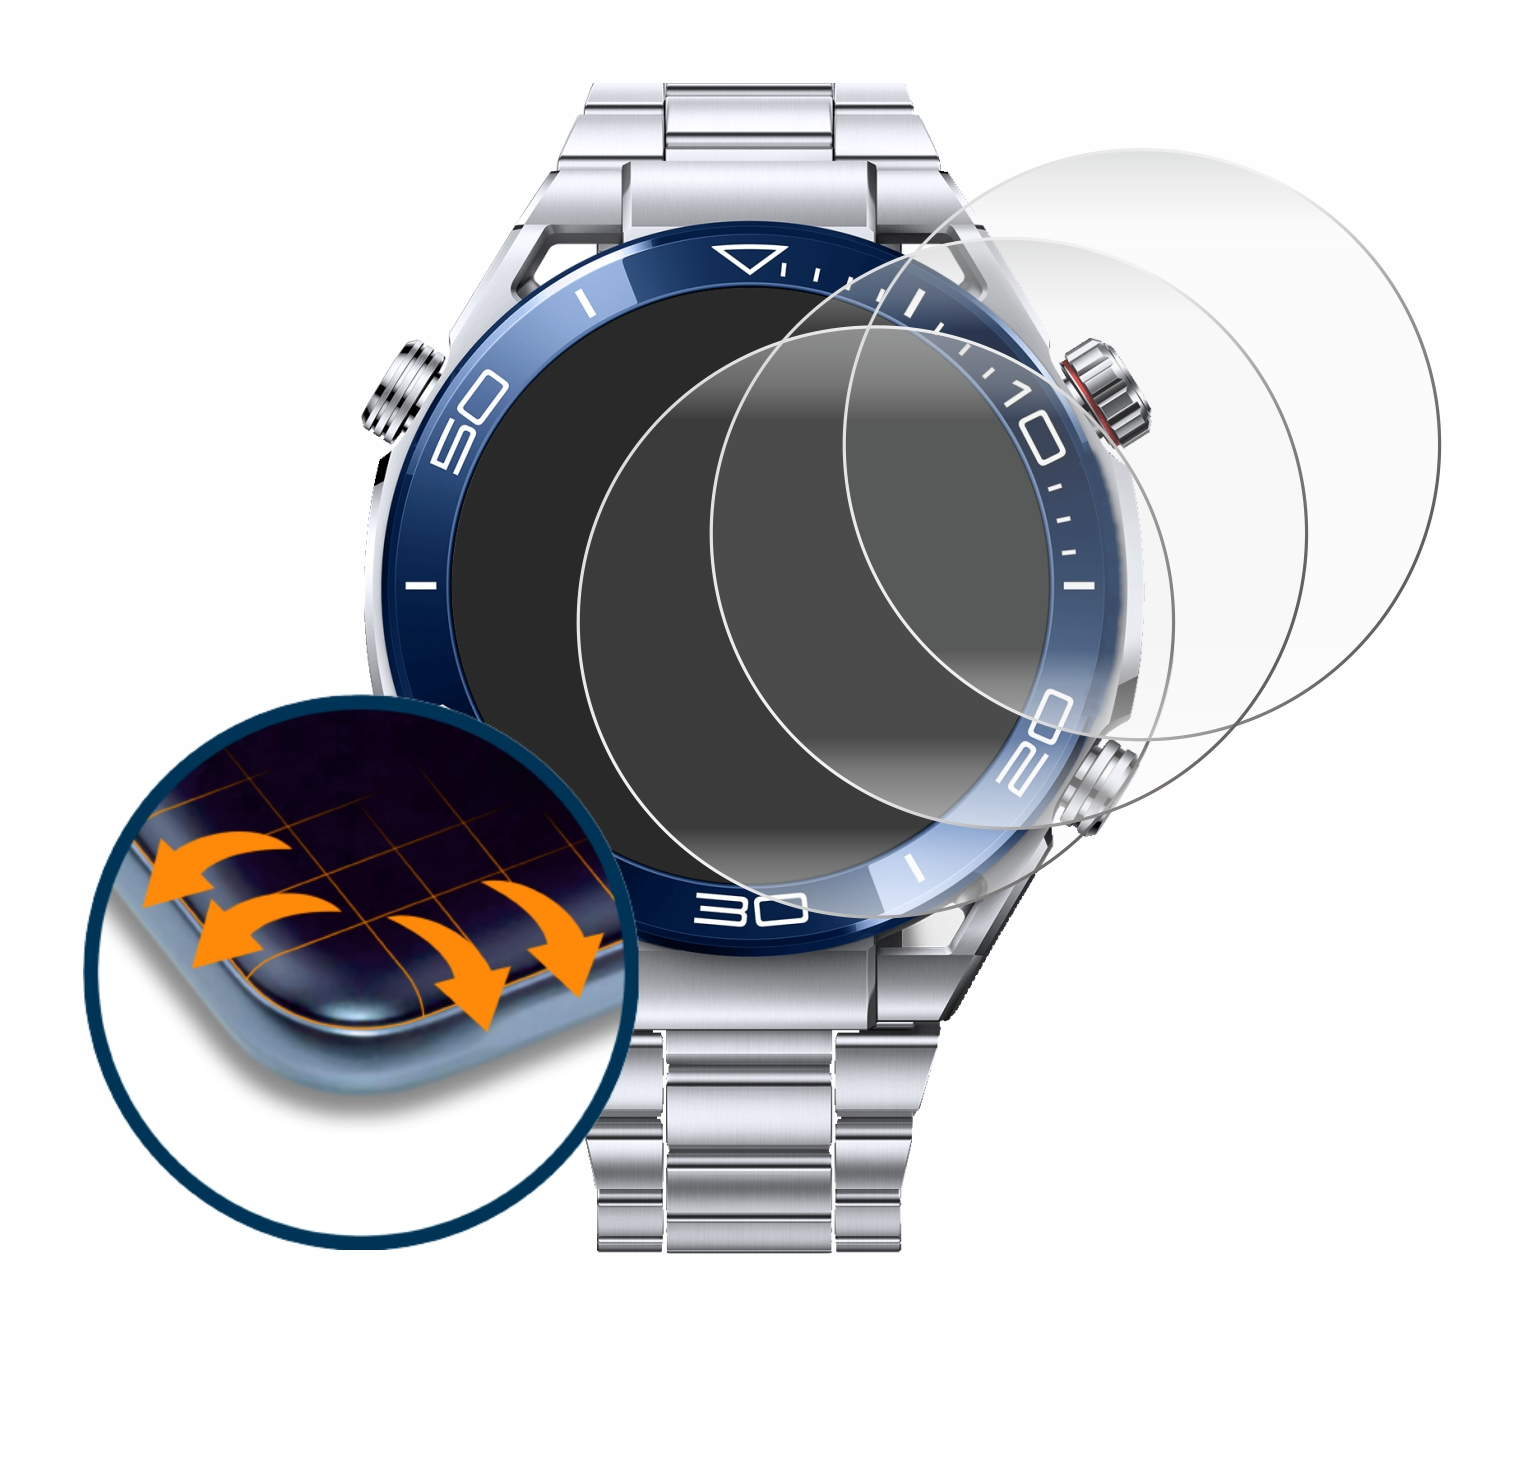 Flex mm)) 3D Watch 4x Curved Huawei SAVVIES Ultimate (48,5 Schutzfolie(für Full-Cover